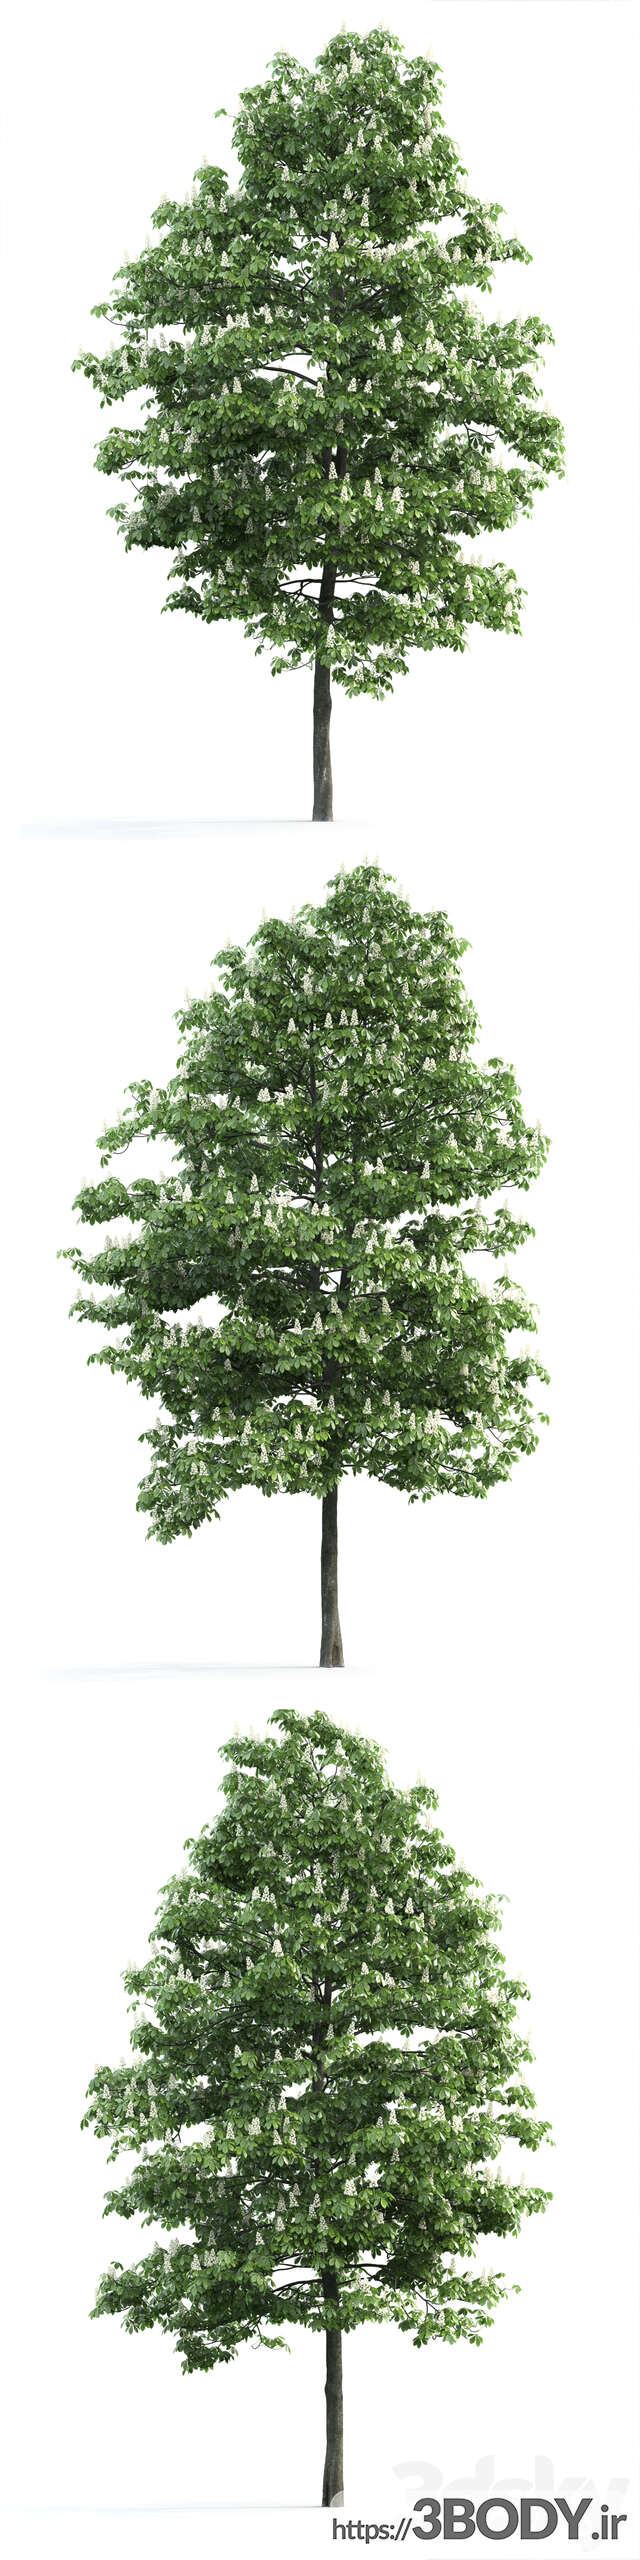 مدل سه بعدی درخت شاه بلوط عکس 2